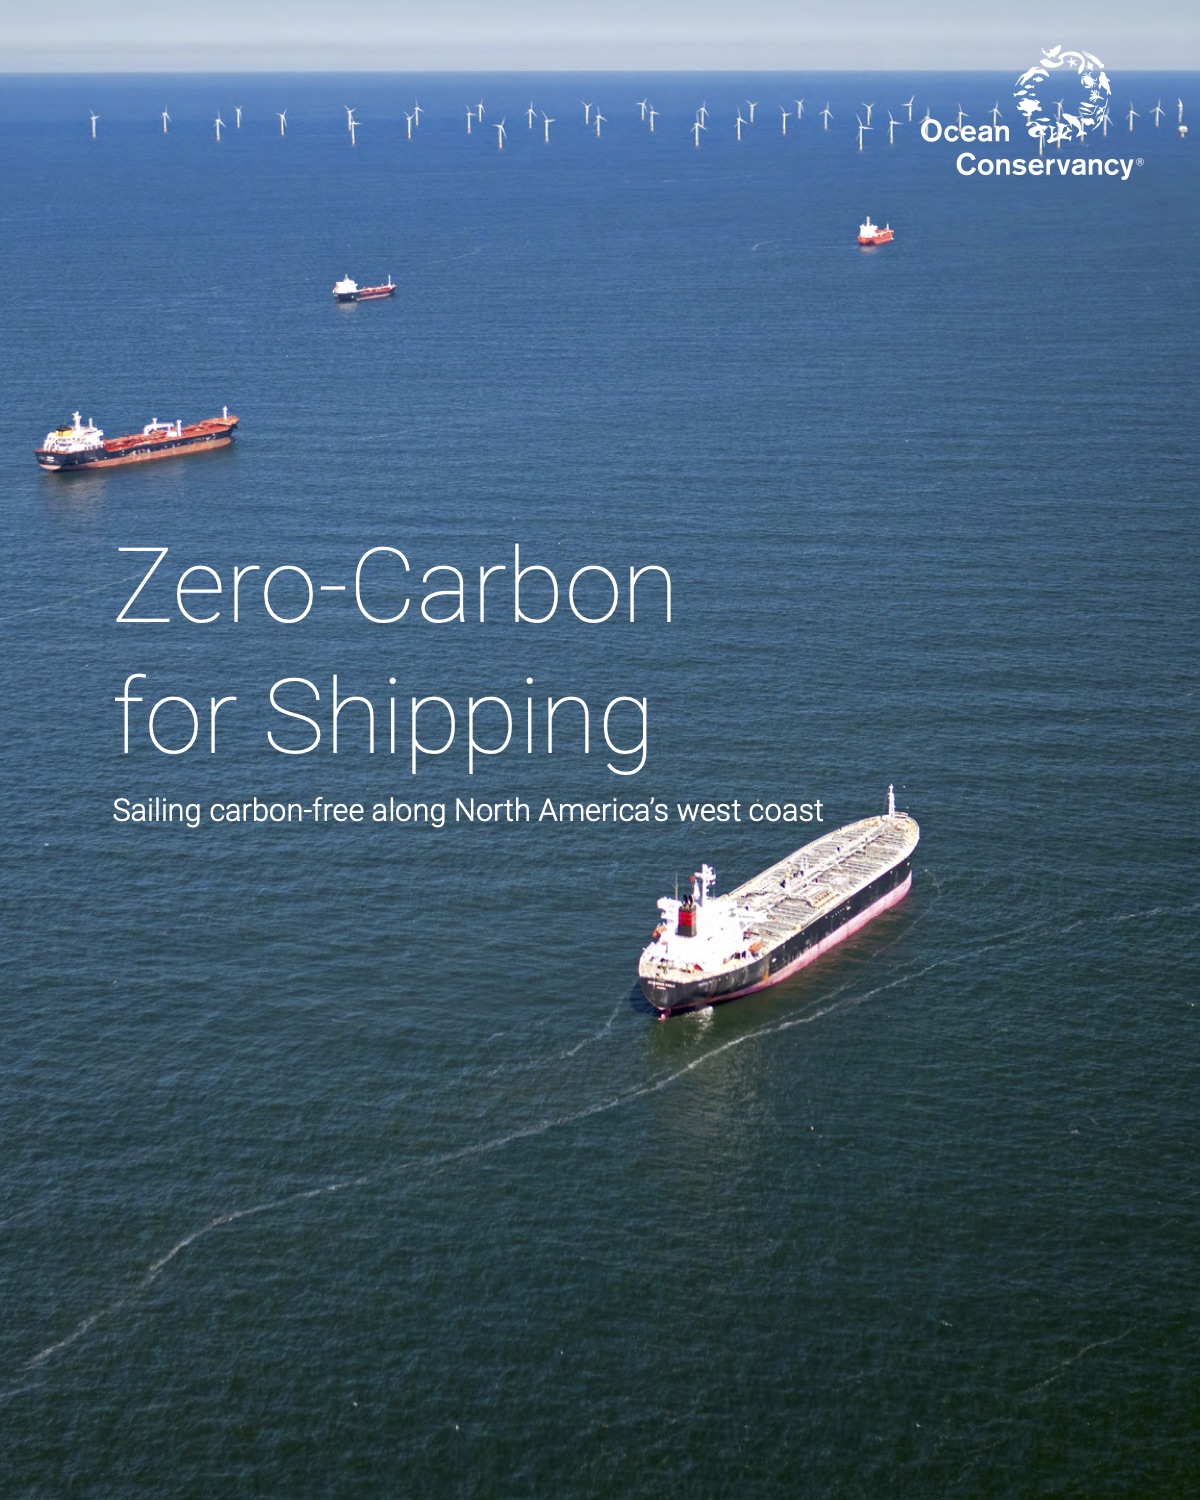 Zero Carbon for Shipping in North America